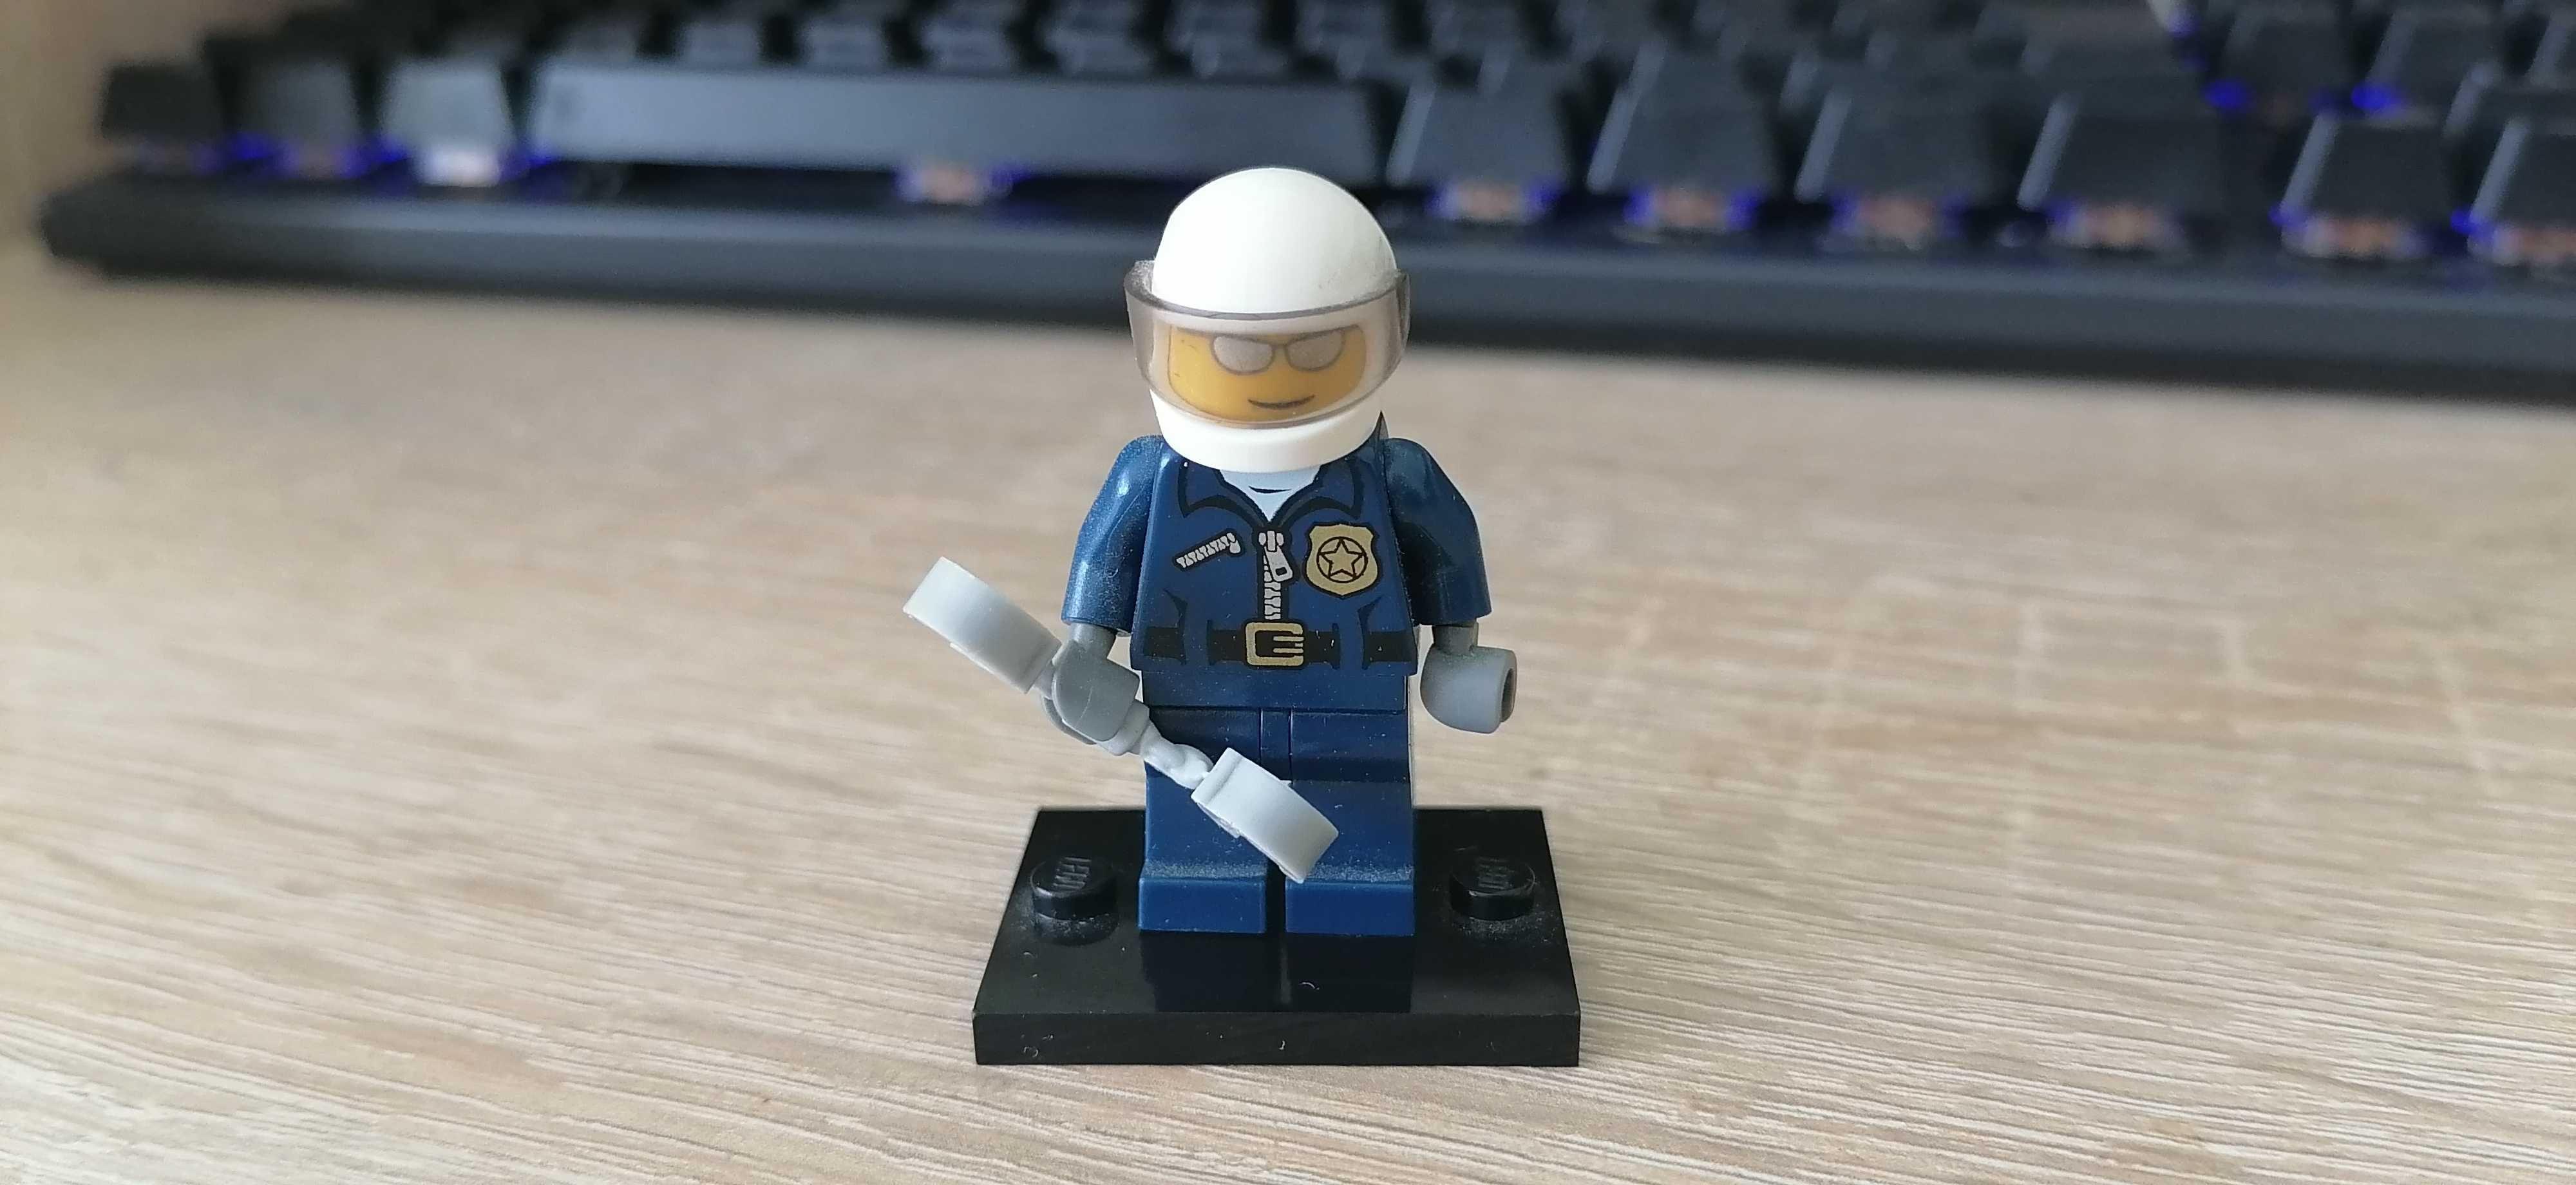 Lego Minifigurka Policjant
Lego Minifigurka Policjant